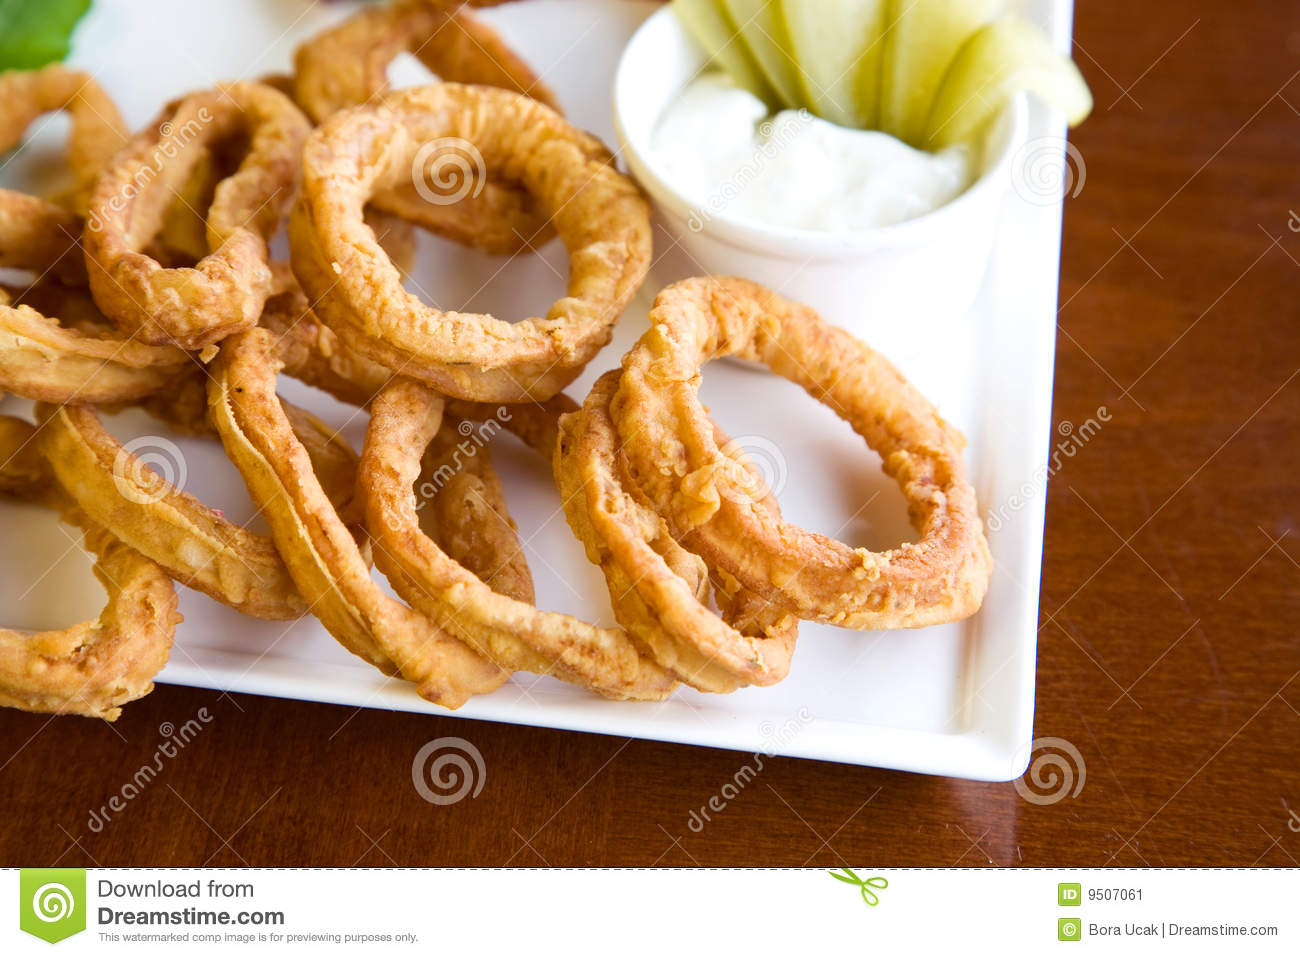 Onion Rings Stock Image   Image  9507061